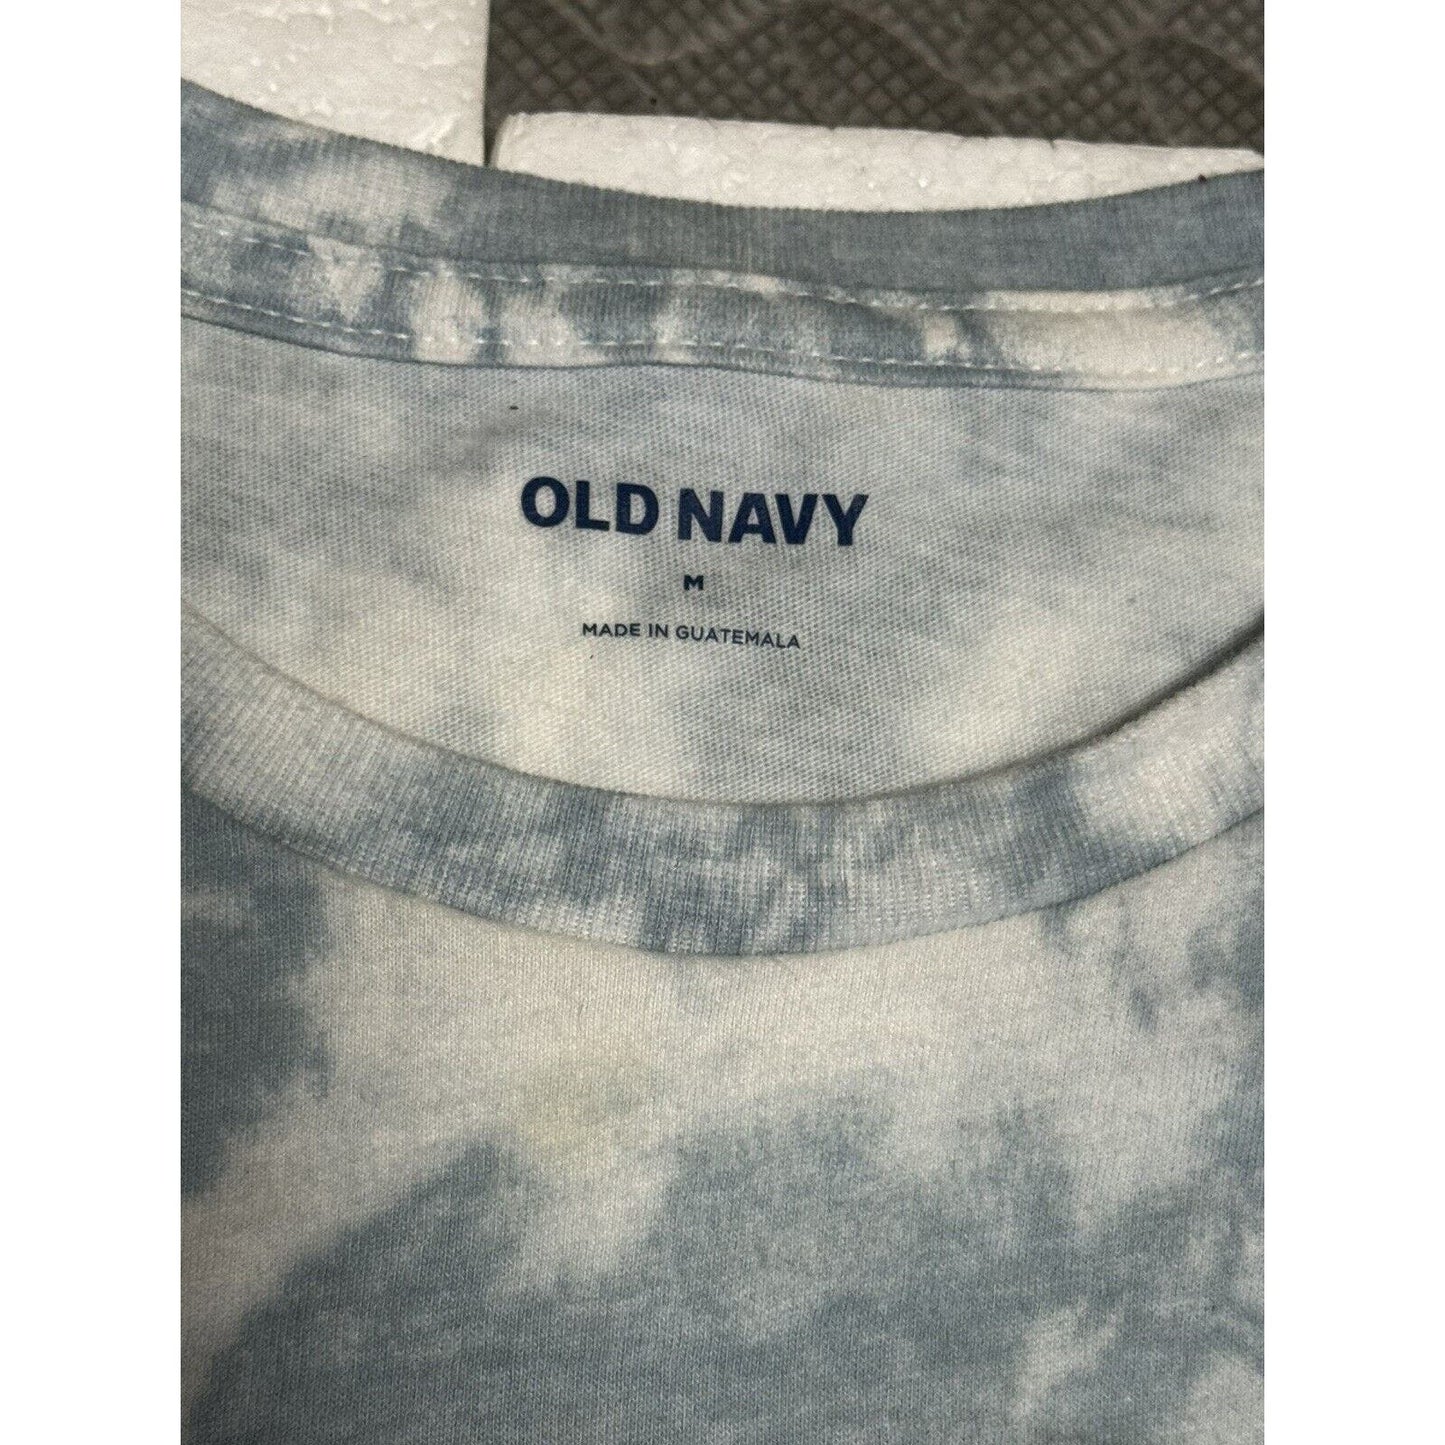 Old Navy Star Wars The Mandalorian Graphic T-Shirt Light Blue White Medium